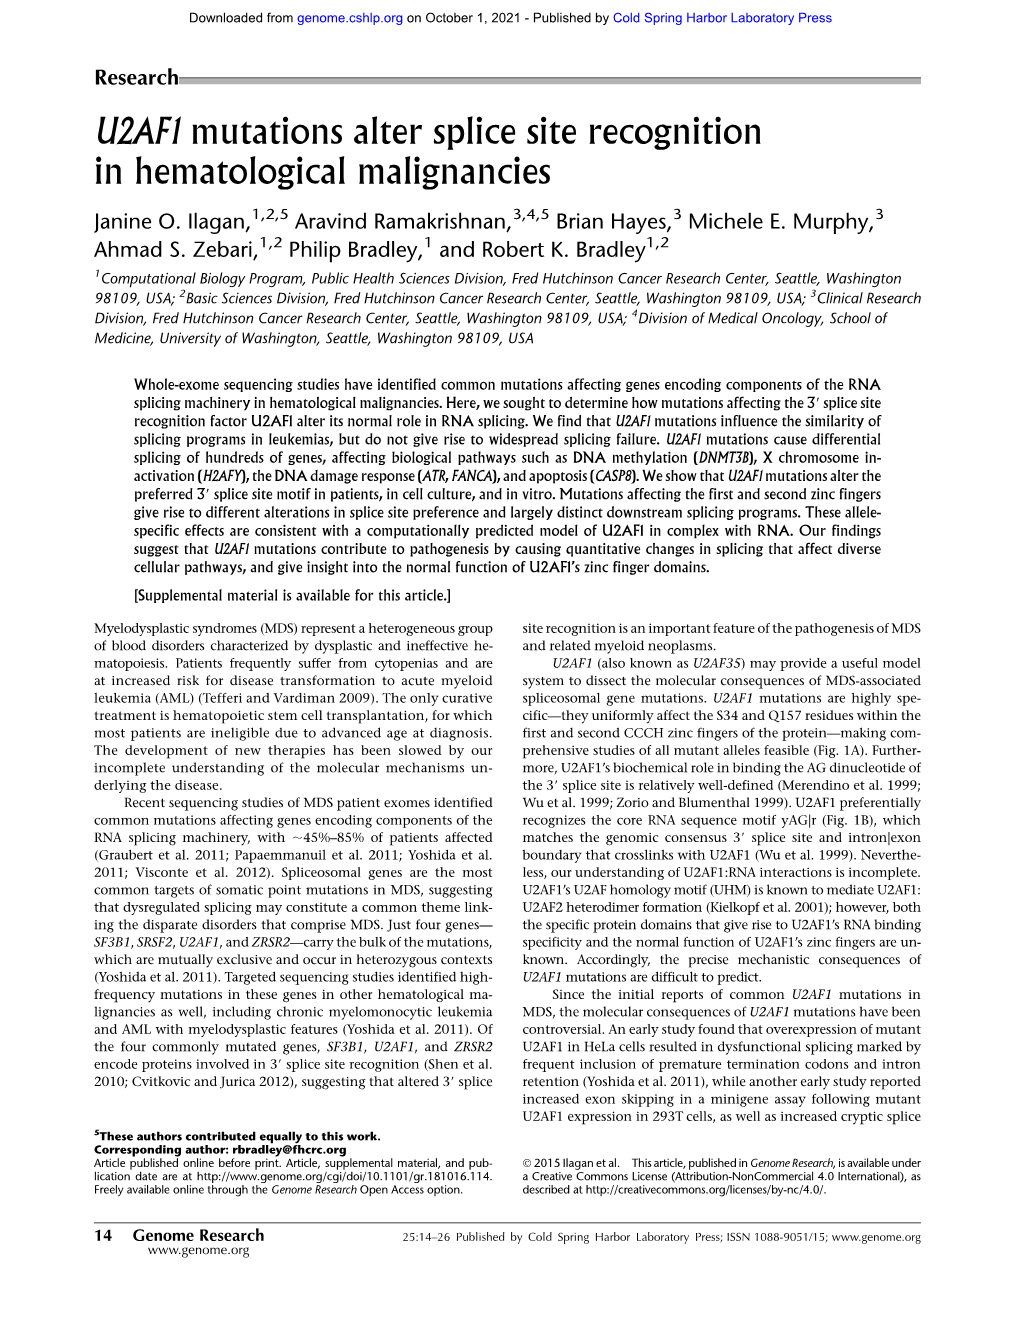 U2AF1 Mutations Alter Splice Site Recognition in Hematological Malignancies